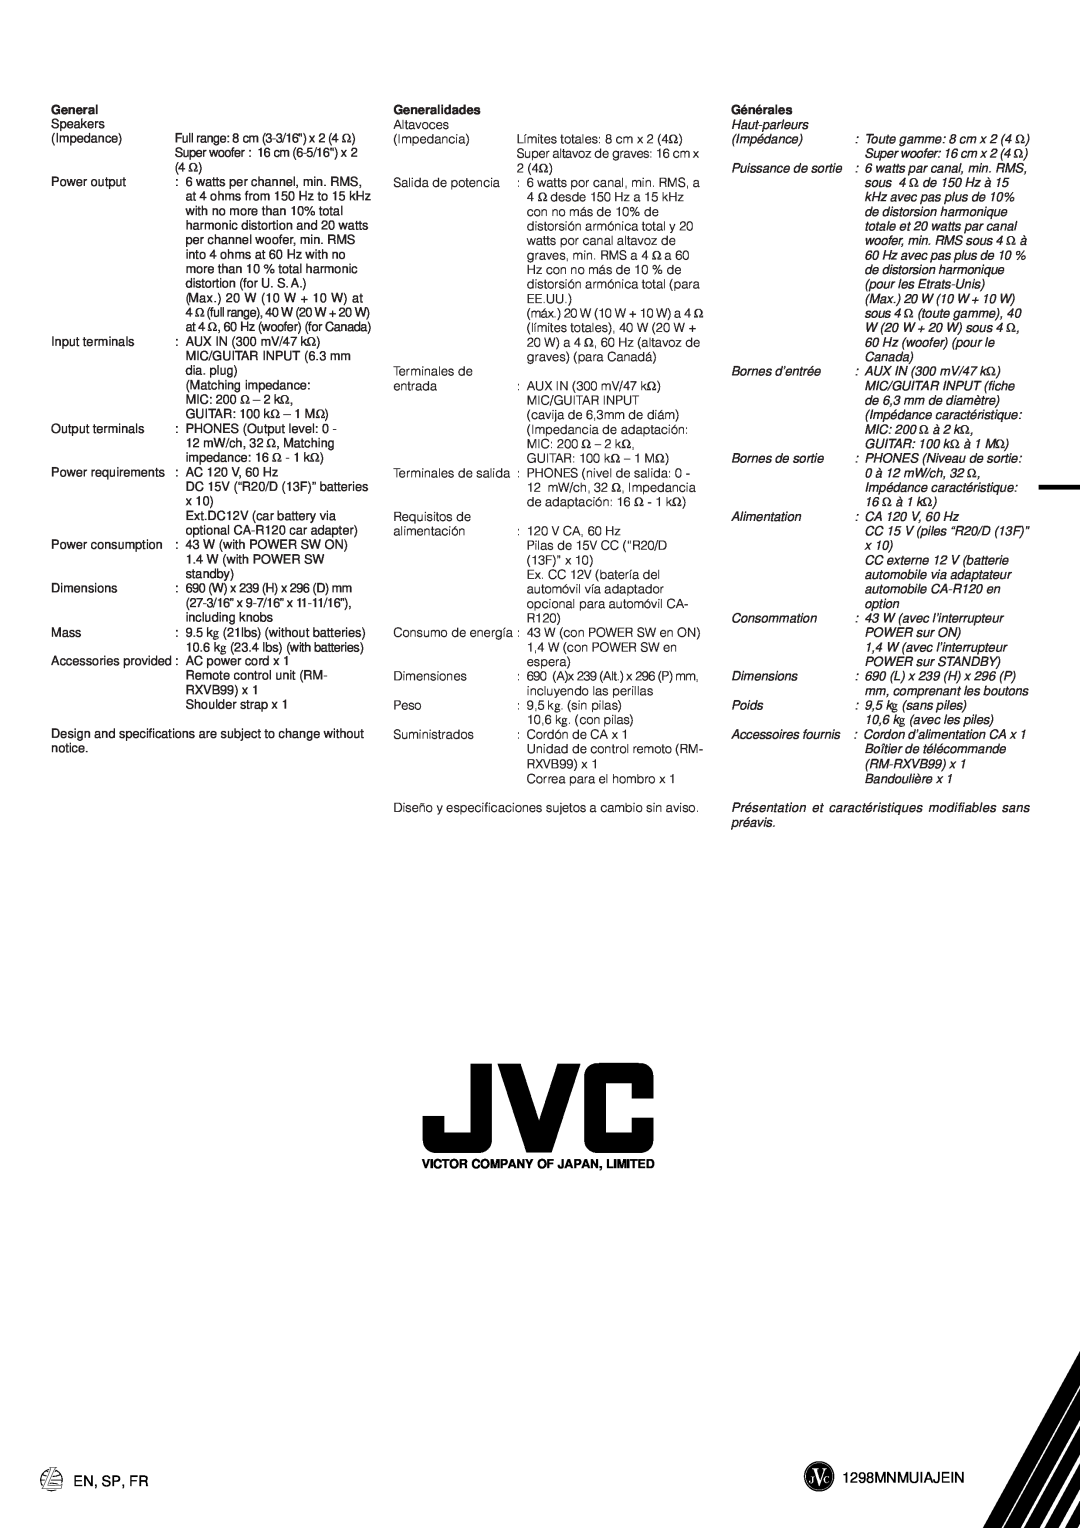 JVC RV-B99 Generalidades, Victor Company Of Japan, Limited, Générales, Haut-parleurs, Toute gamme: 8 cm x 2 4 Ω, Poids 